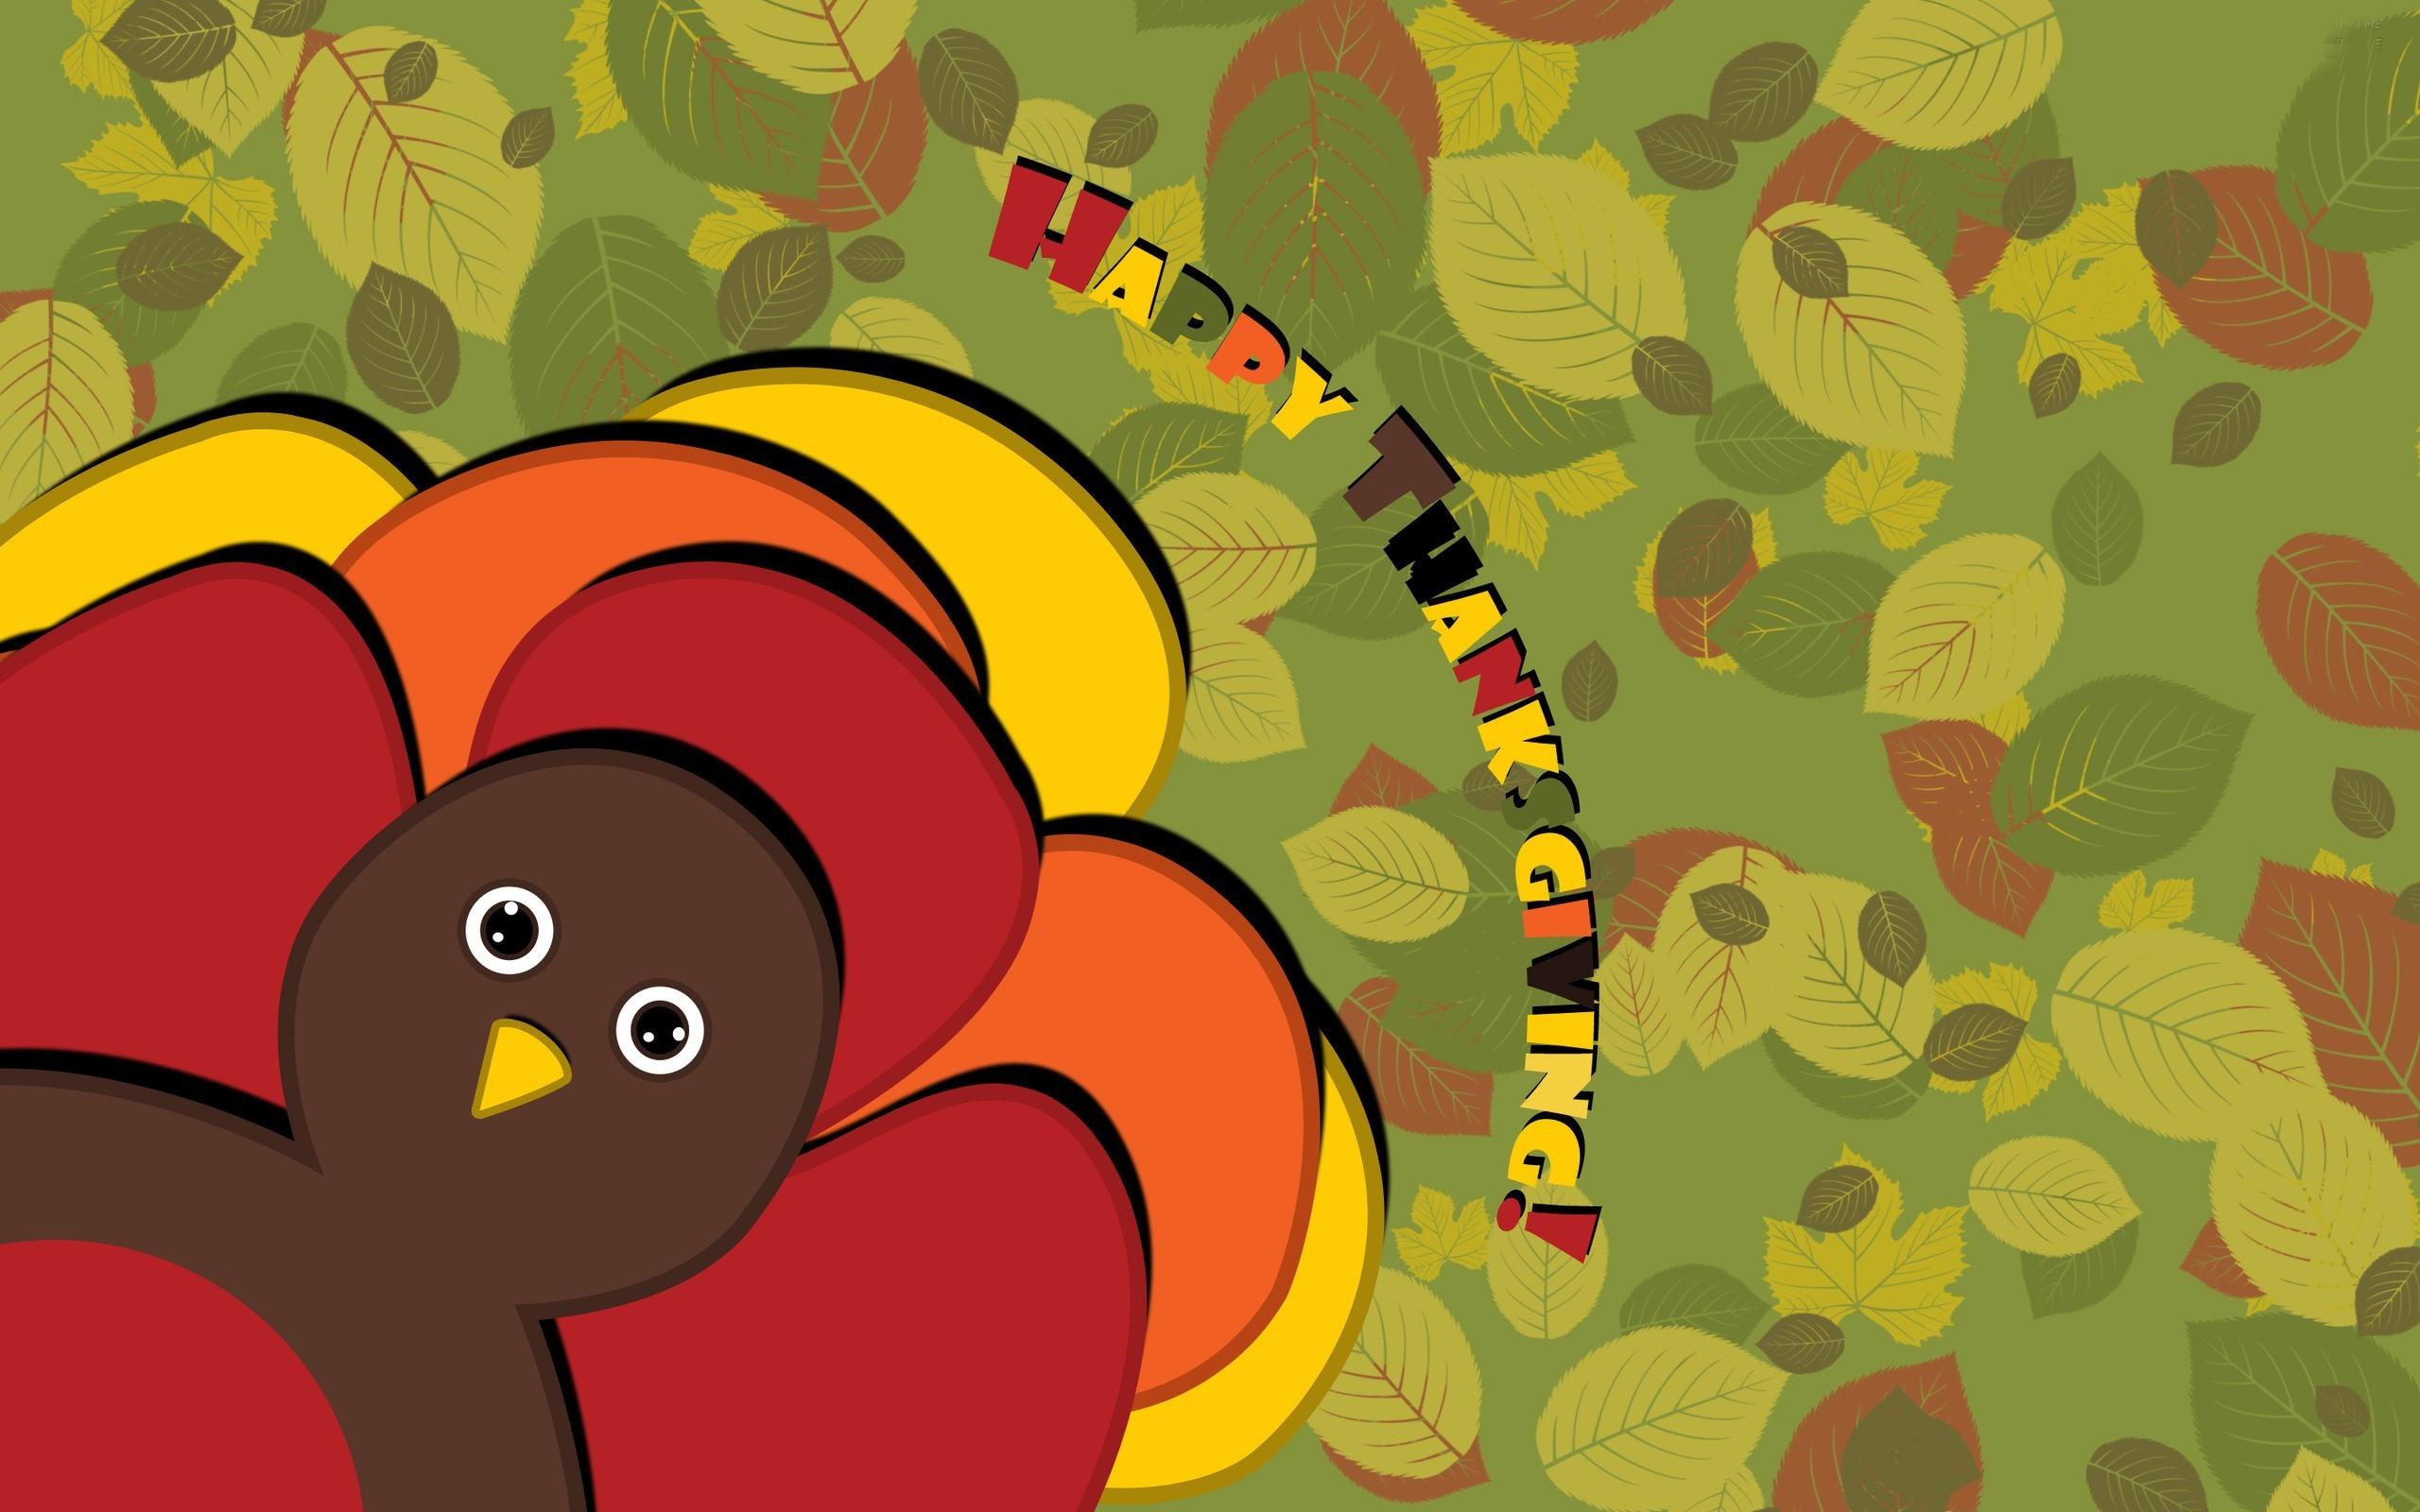 Funny Thanksgiving HD Wallpaper